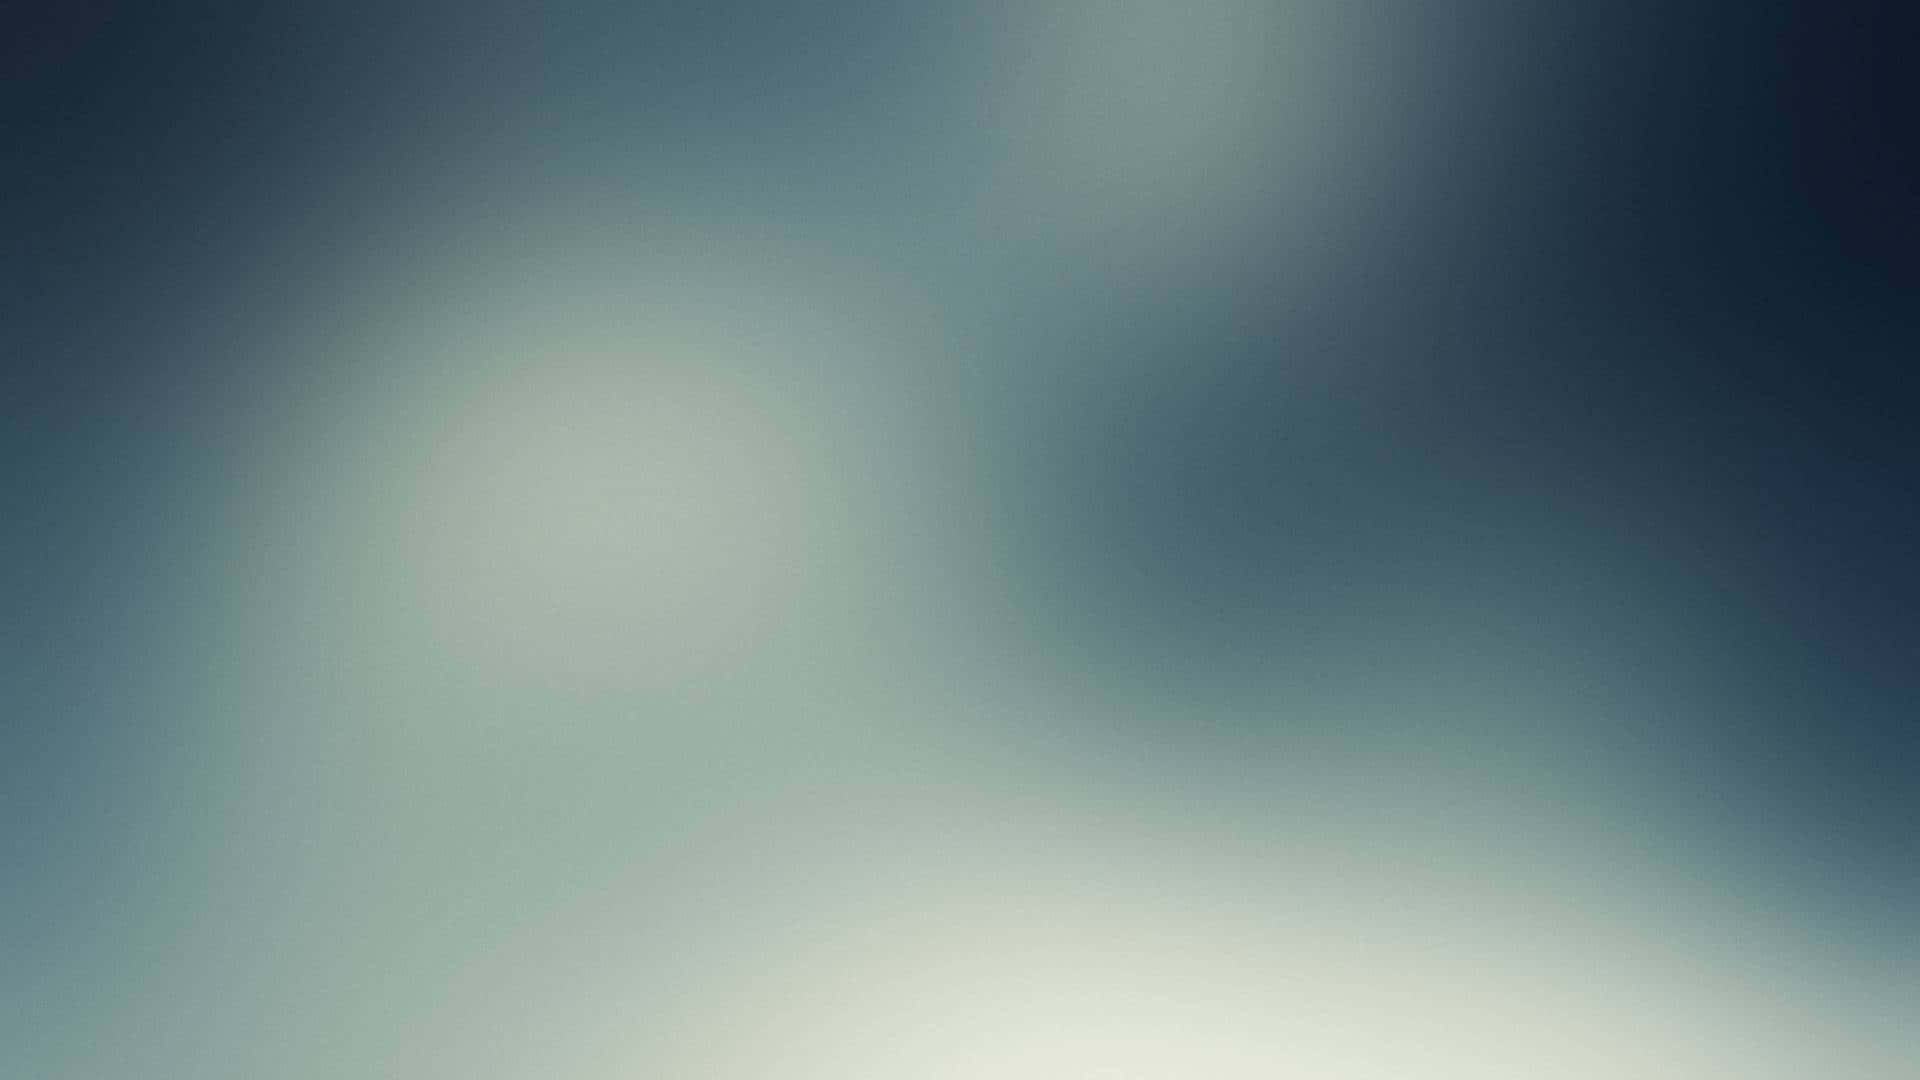 Blurry Background Light In A Dark Surface 1920 x 1080 Background